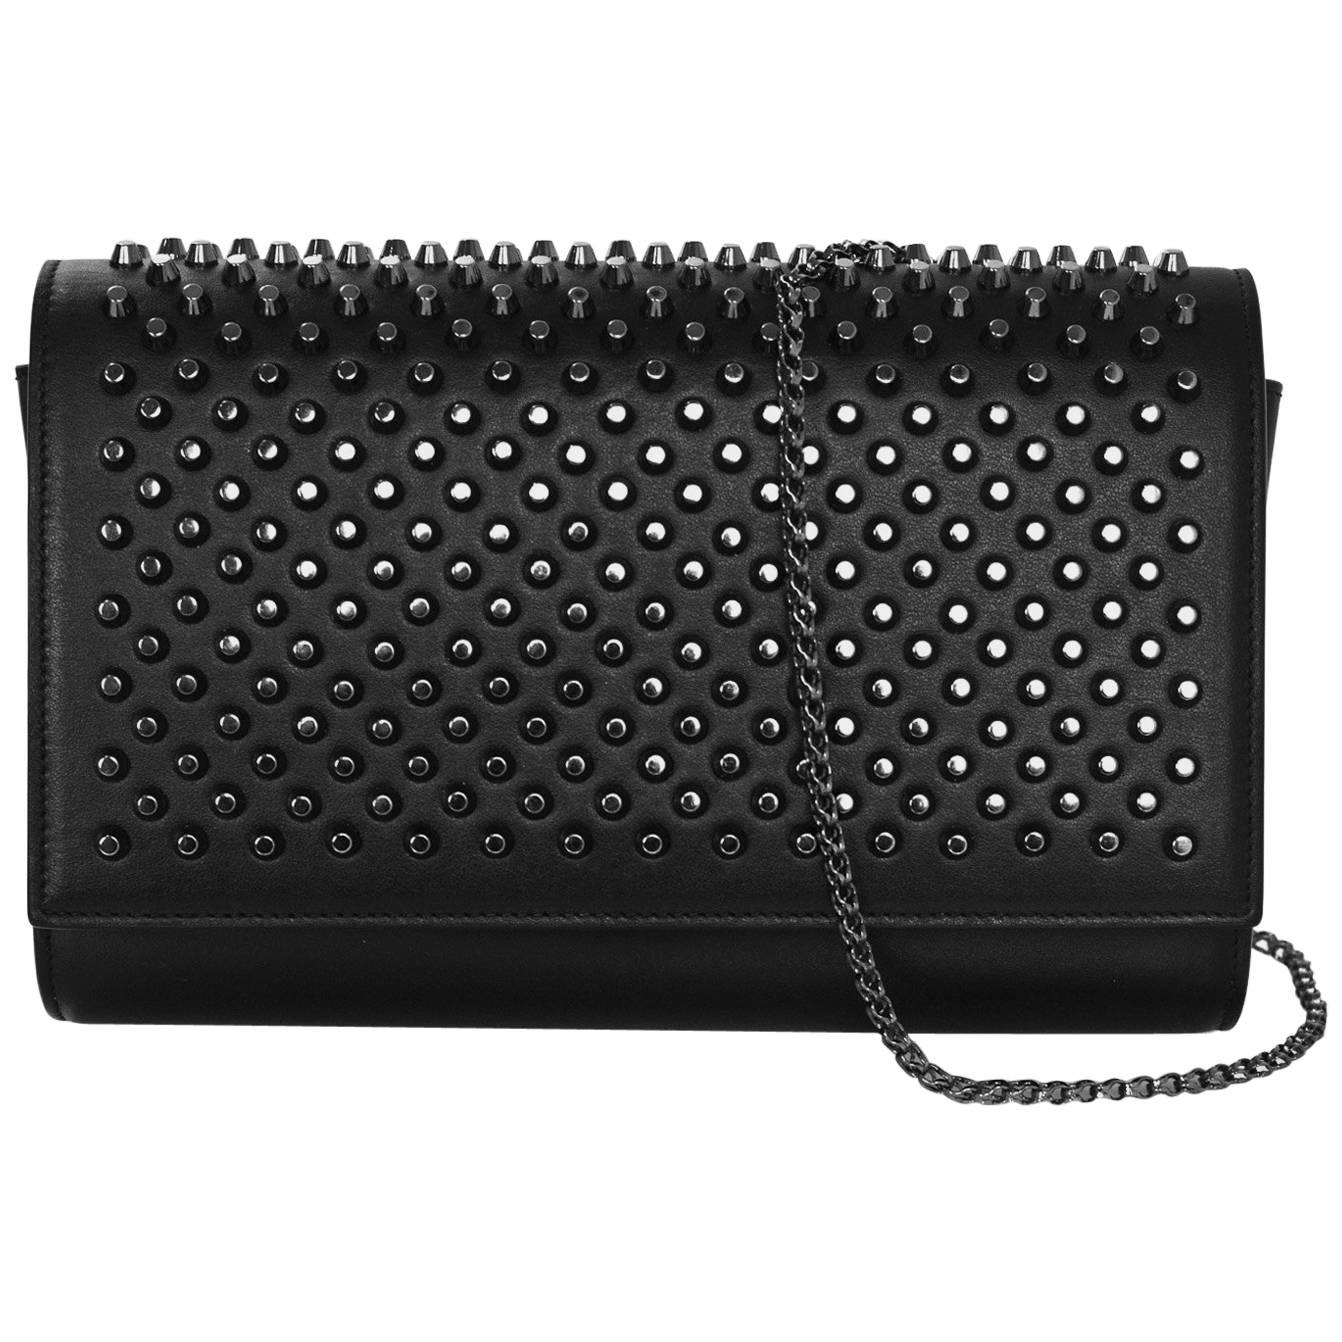 Christian Louboutin Black Leather Paloma Studded Spike Clutch/Crossbody Bag